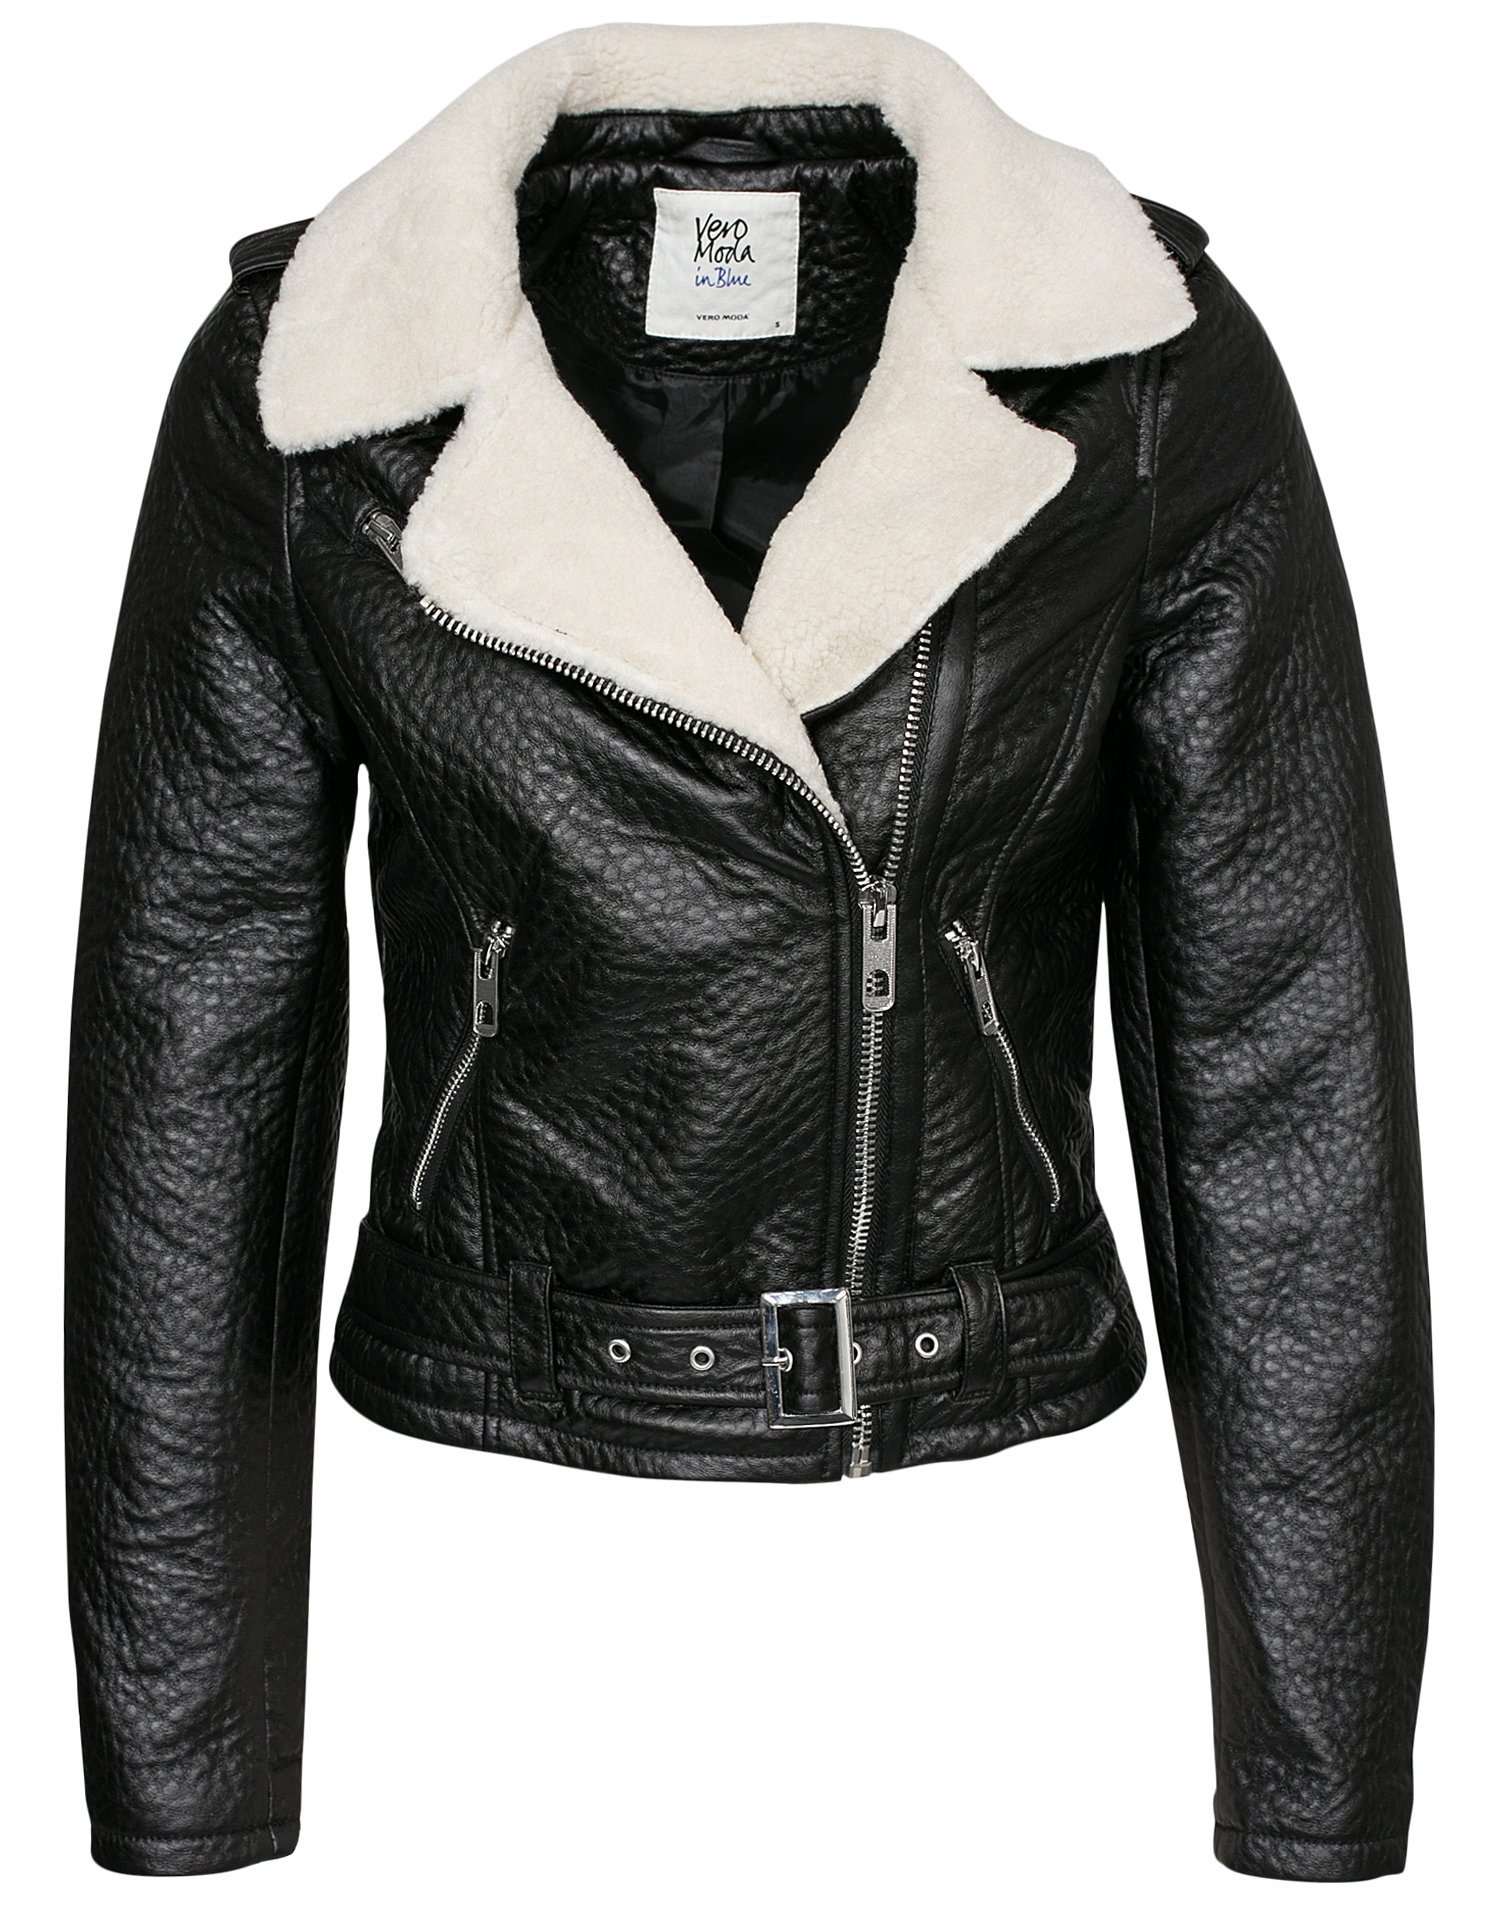 Hella Short Pu Jacket - Vero Moda - Black - Jackets - Clothing - Women ...